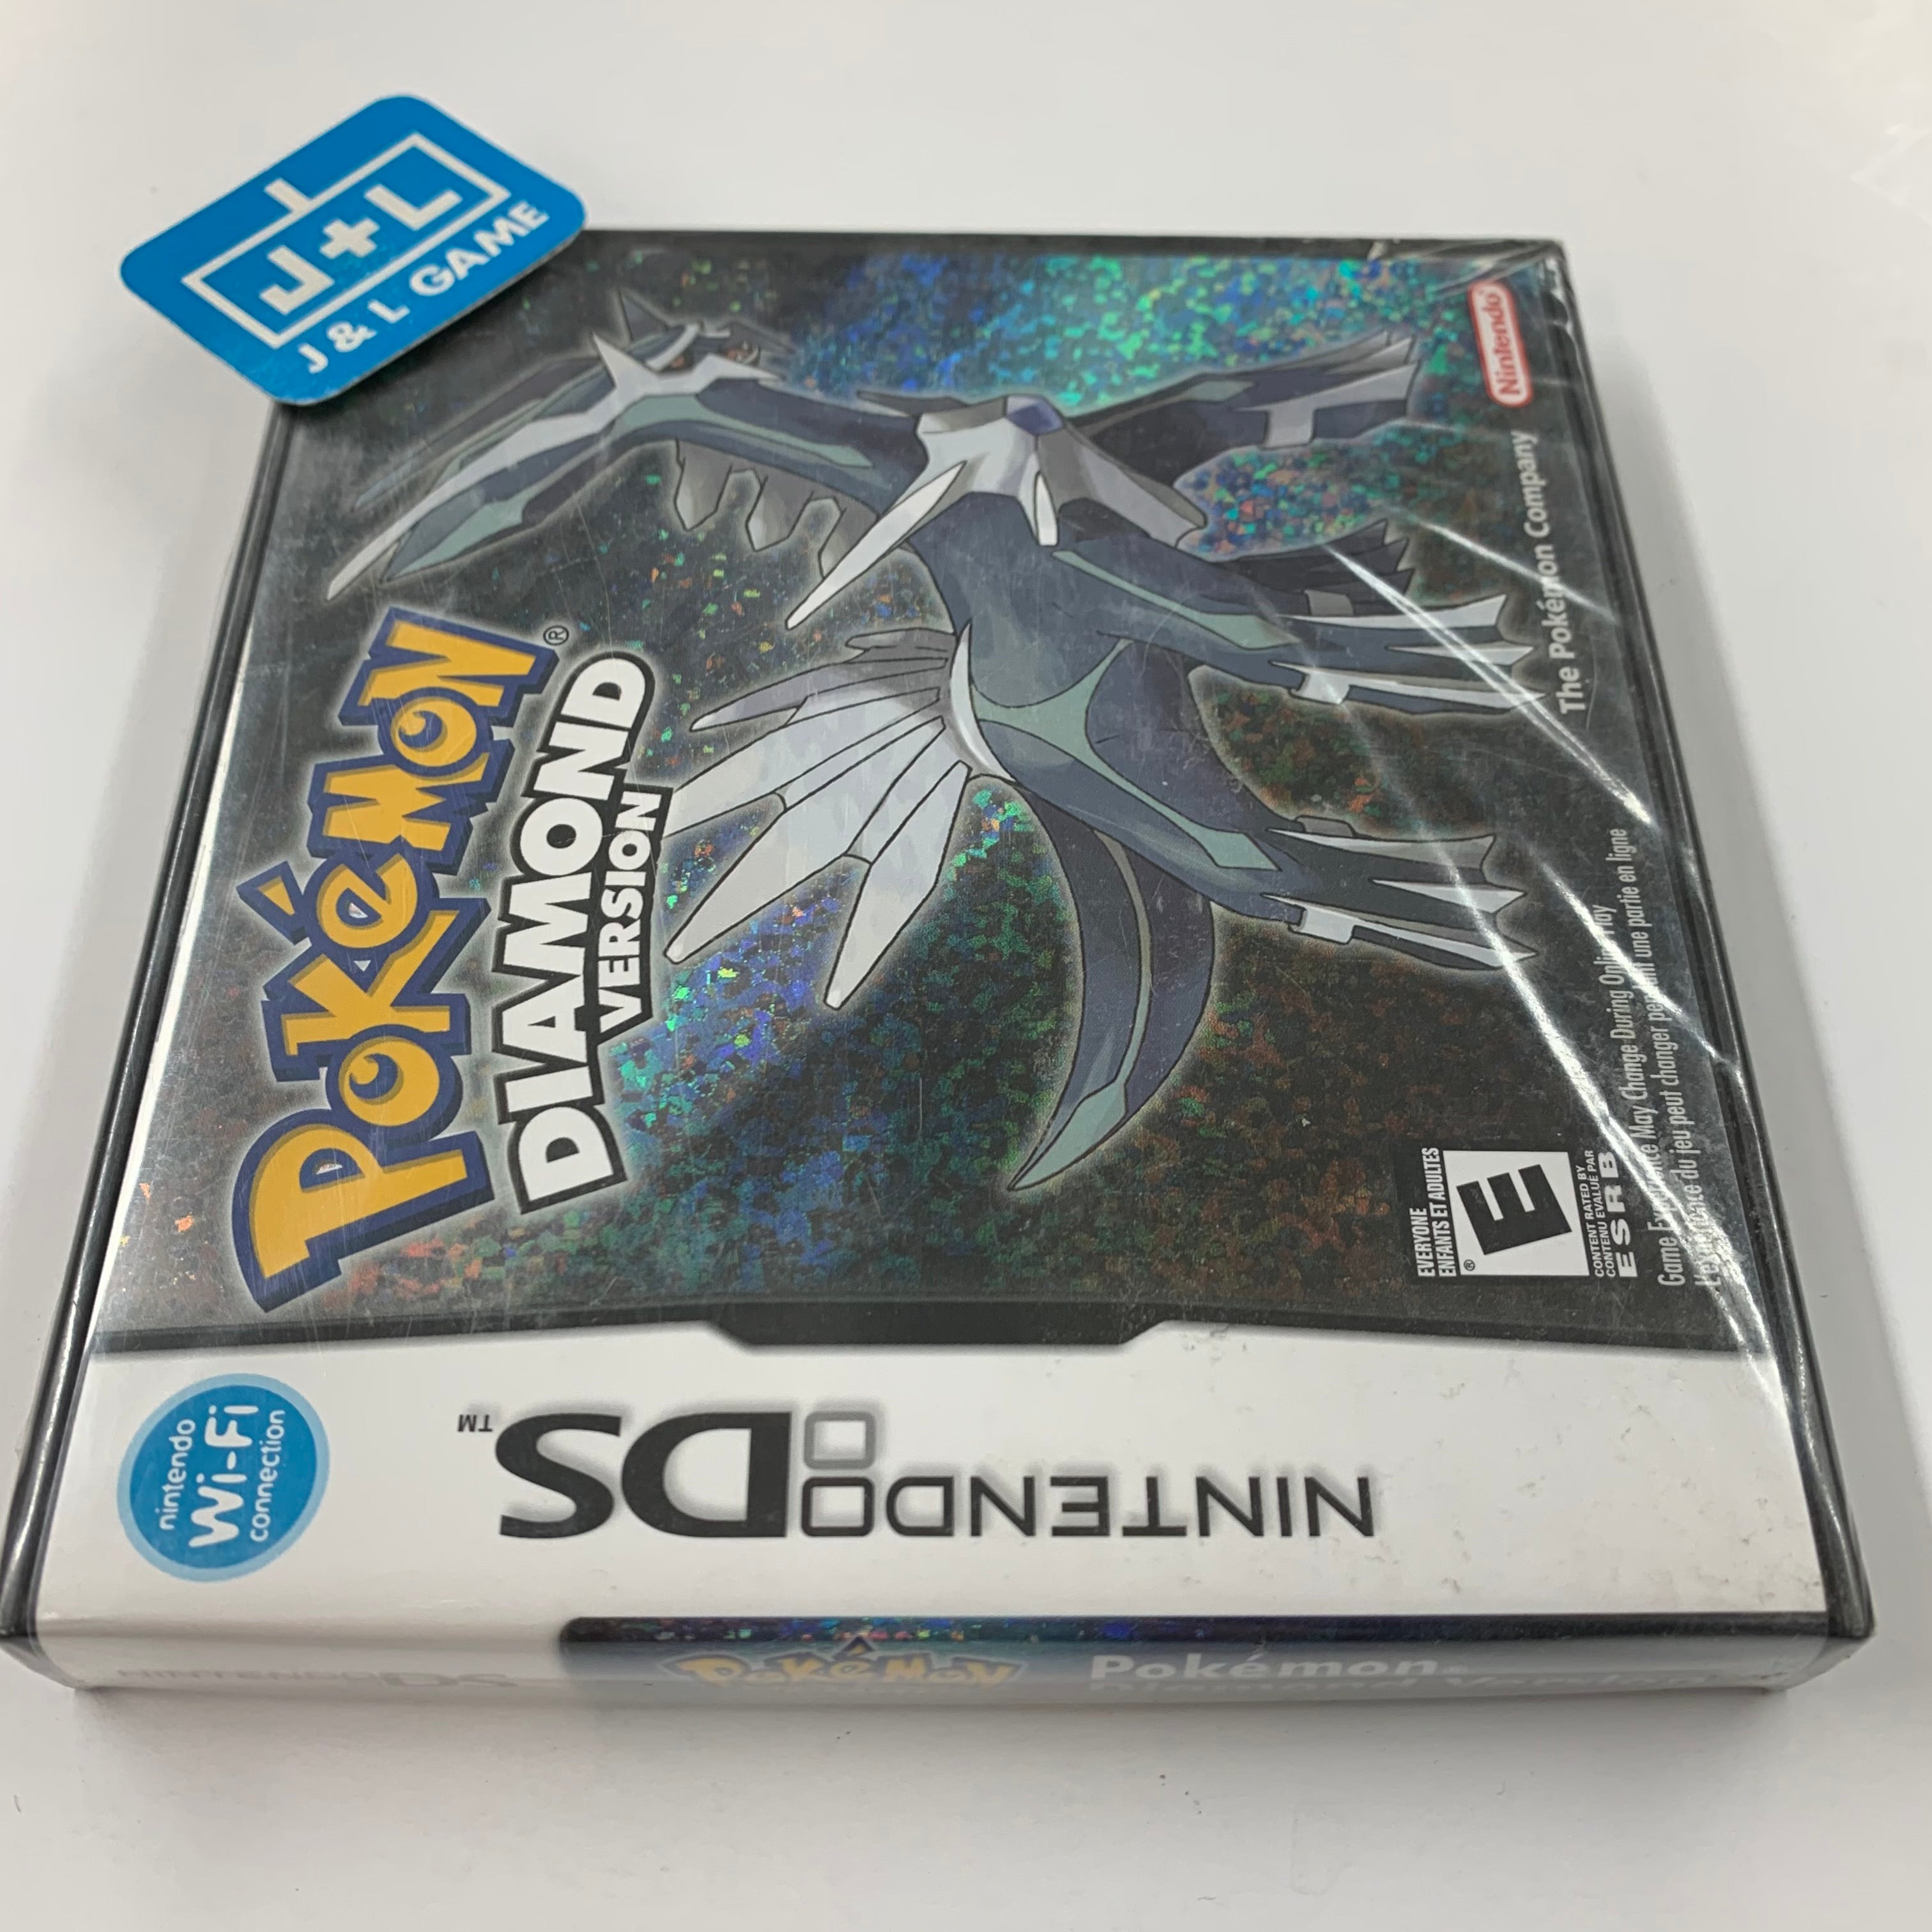 Pokemon Diamond Version (Canada) - (NDS) Nintendo DS Video Games Nintendo   